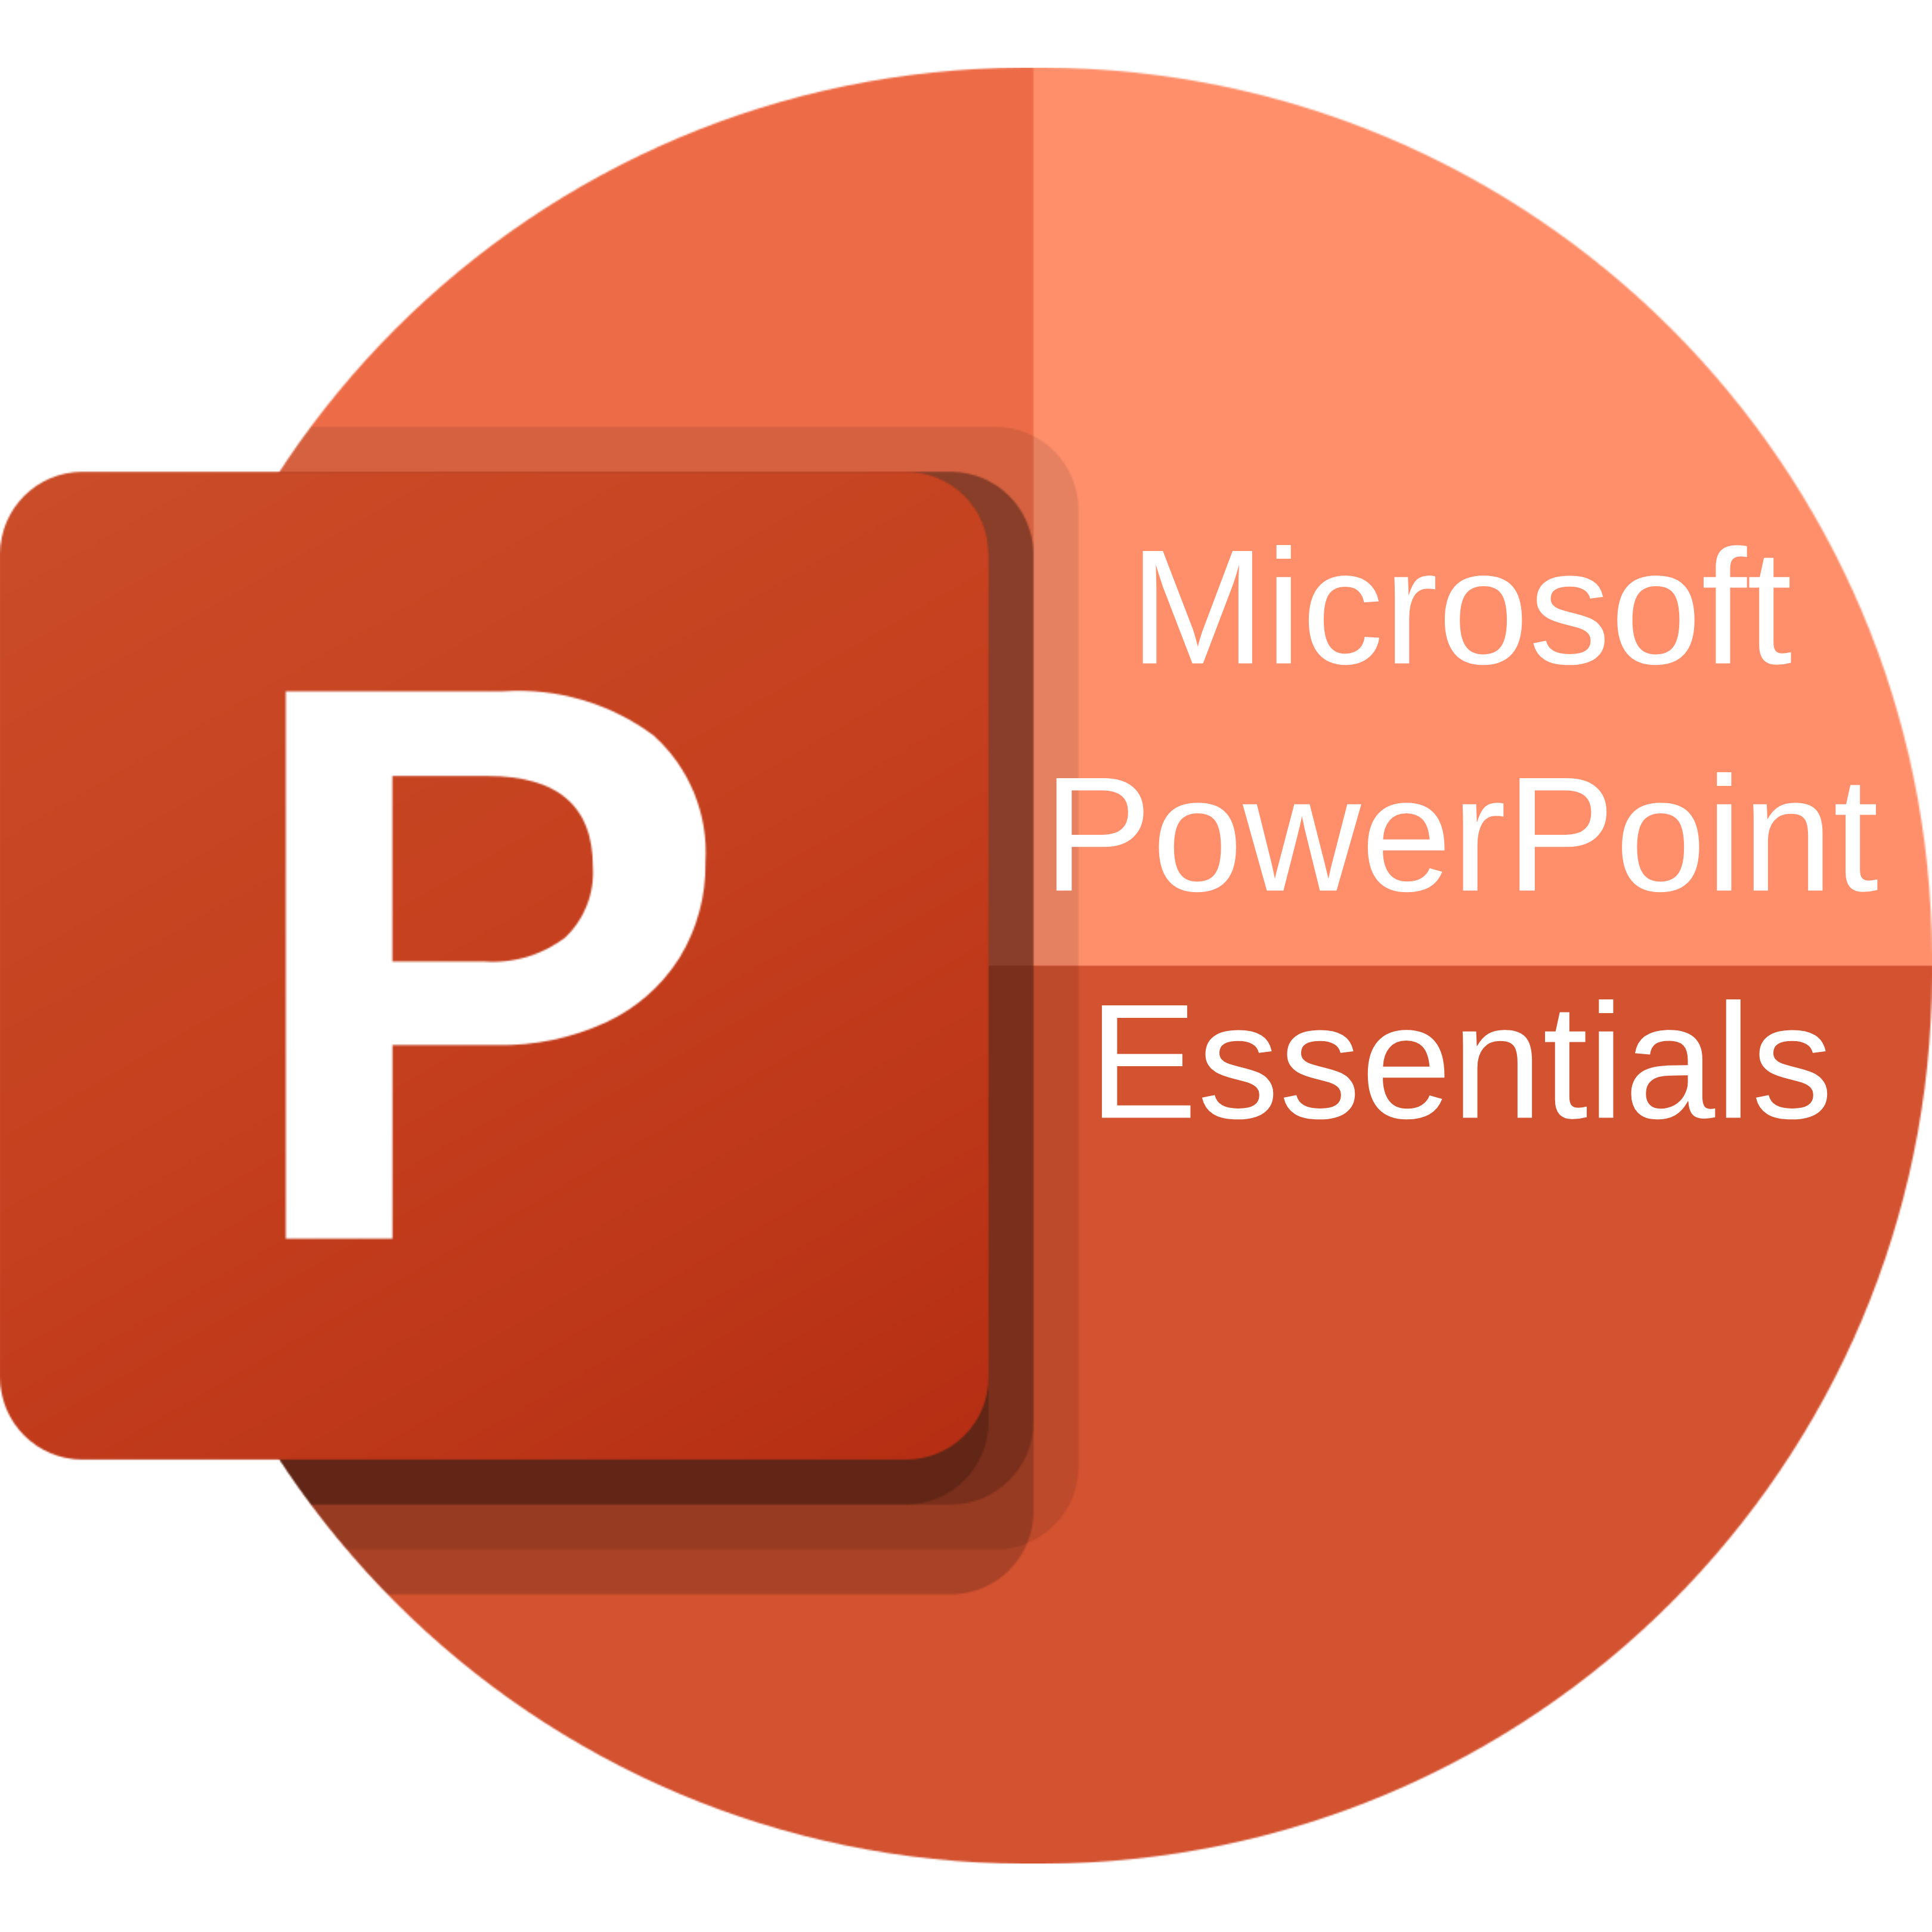 Microsoft PowerPoint Essentials Course